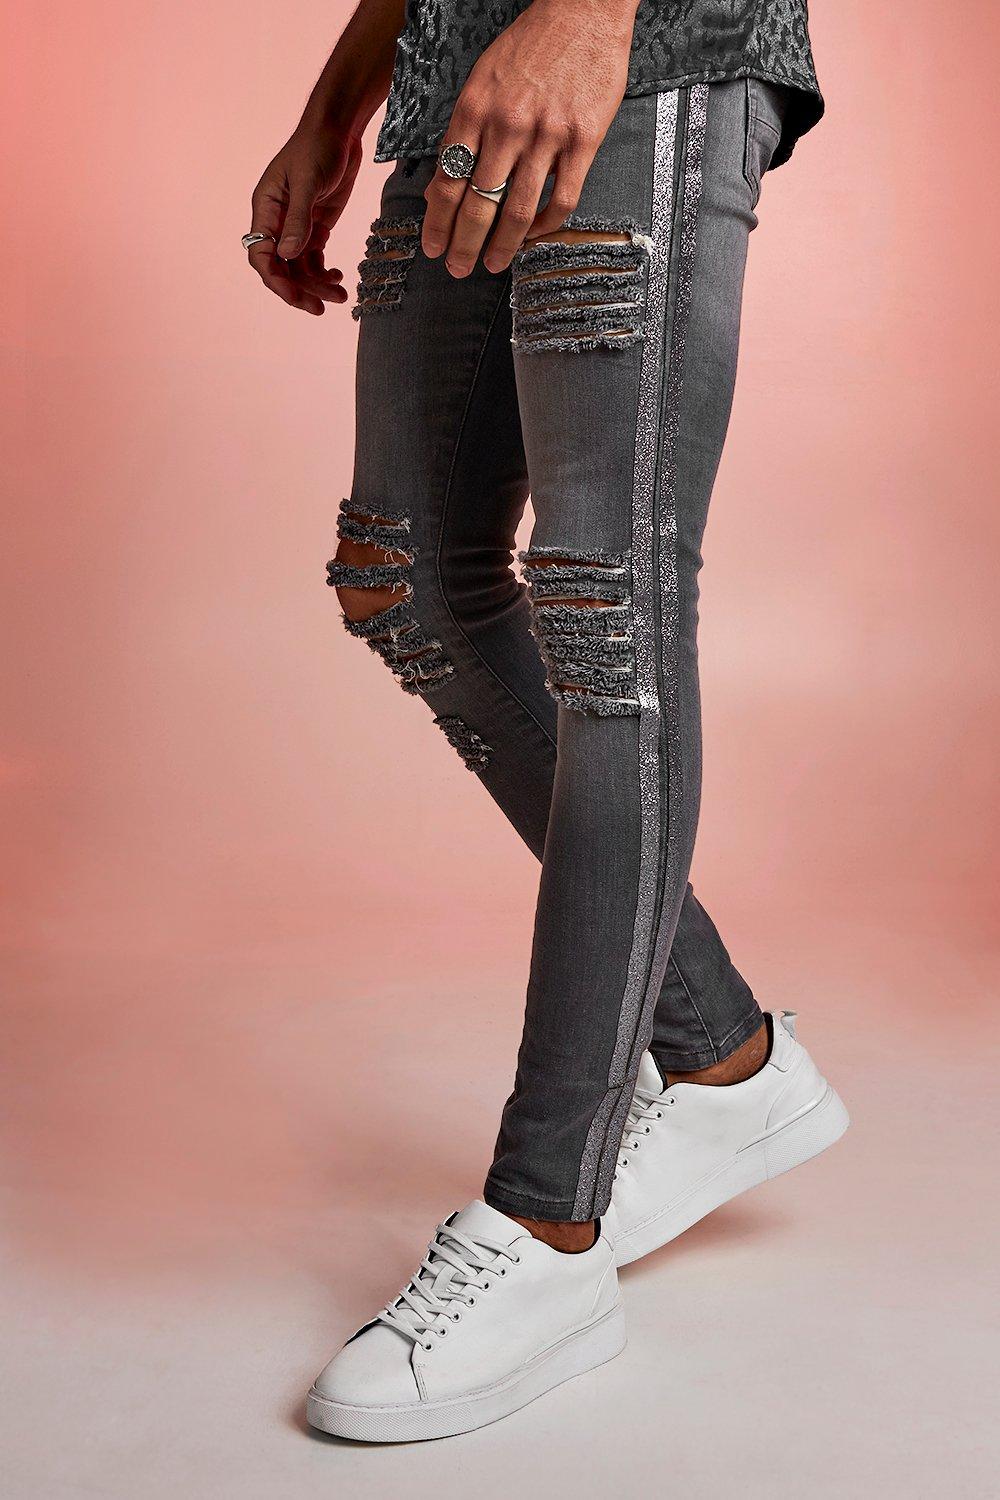 black jeans with glitter stripe